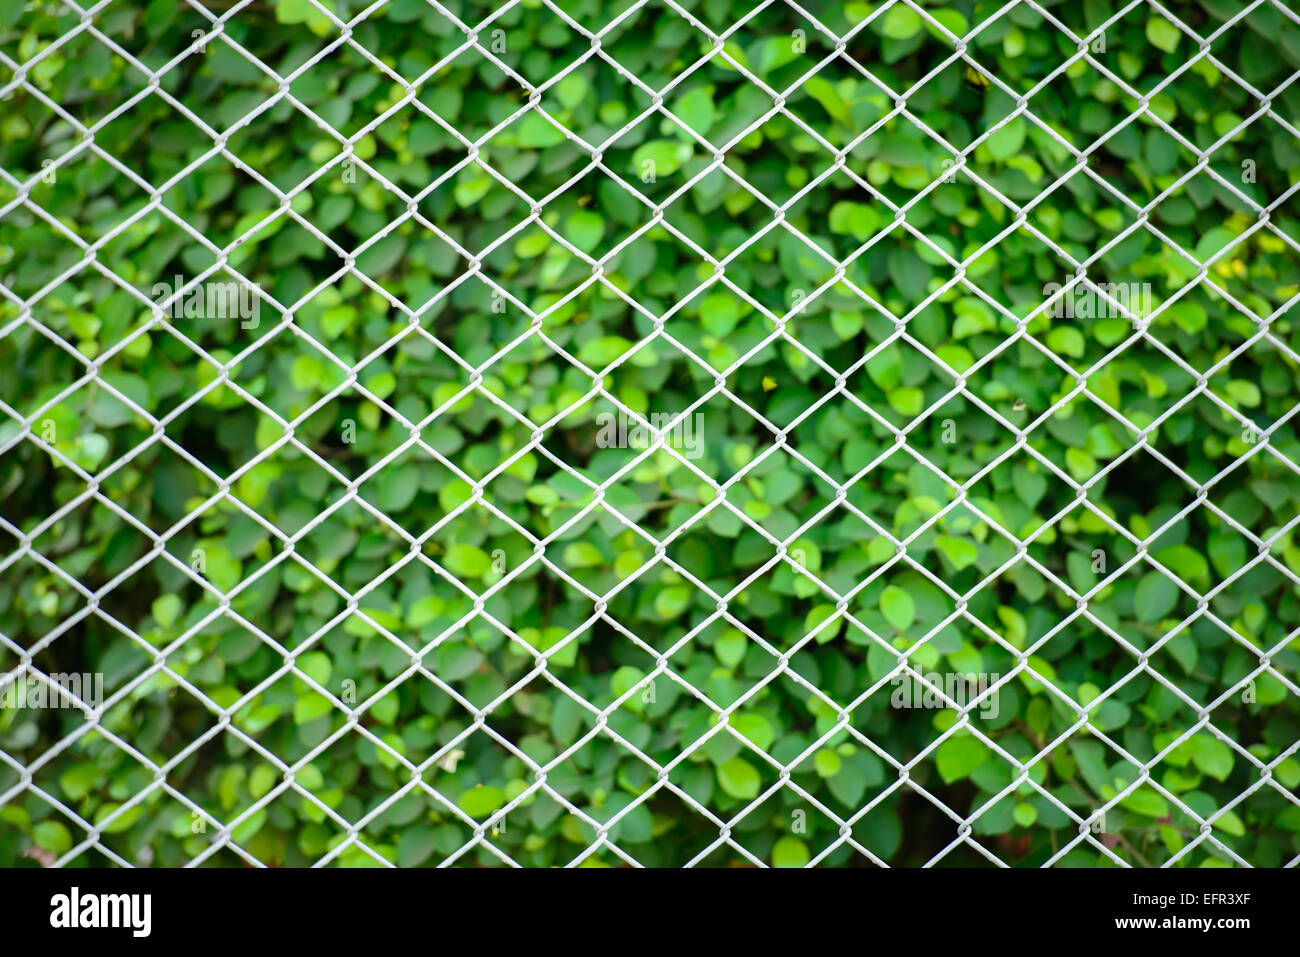 mesh fence Stock Photo